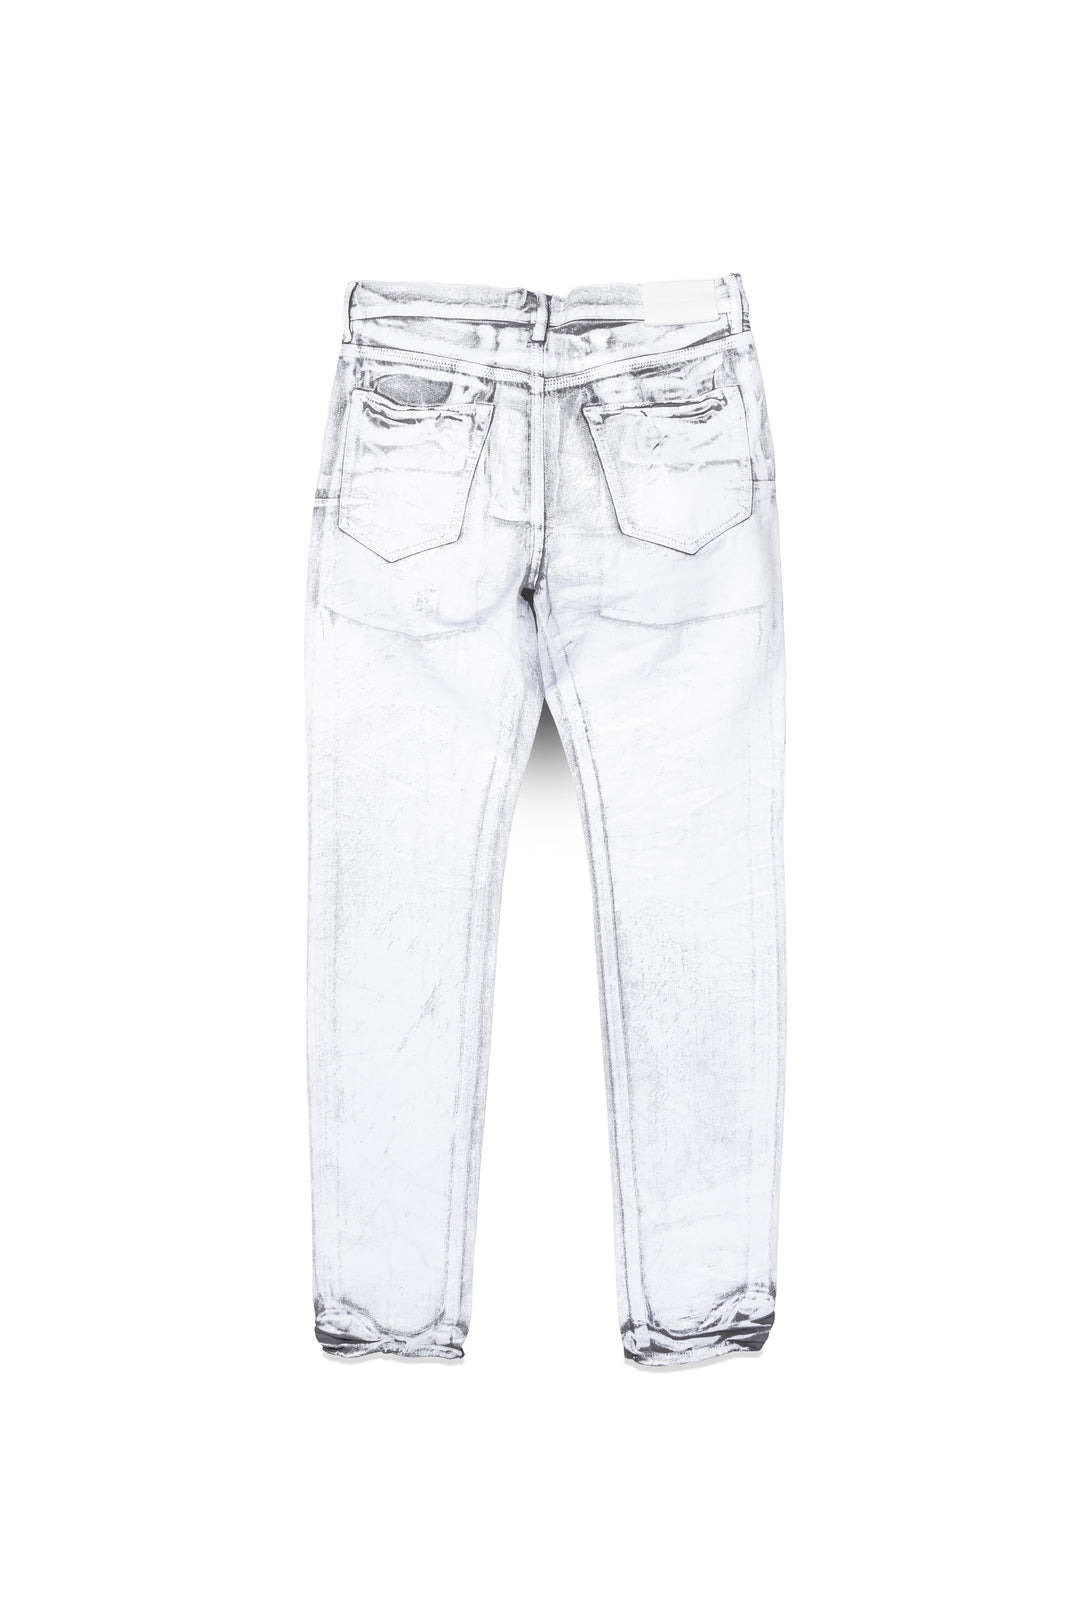 Purple Brand P001 Low Rise Skinny Jeans - Charcoal Overdye White Foil